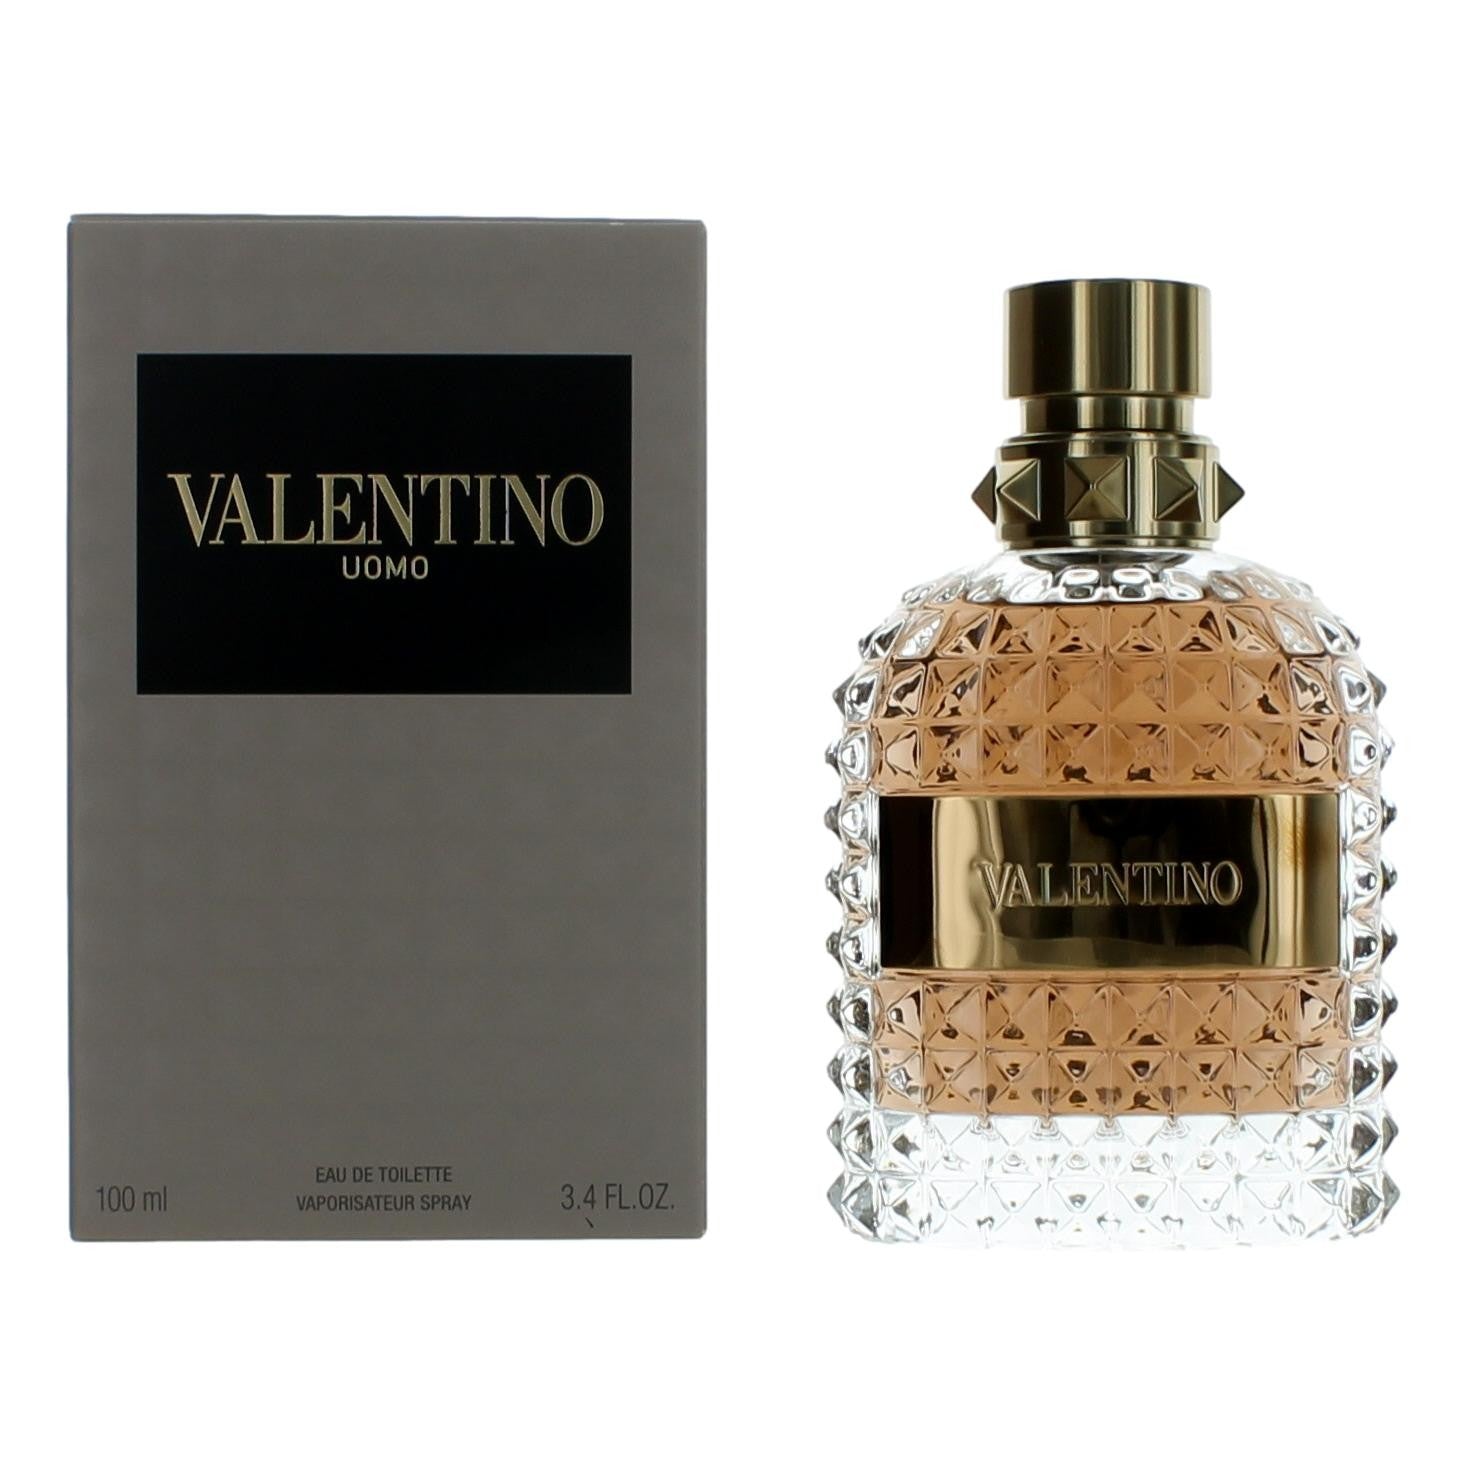 Bottle of Valentino Uomo by Valentino, 3.4 oz Eau De Toilette Spray for Men.